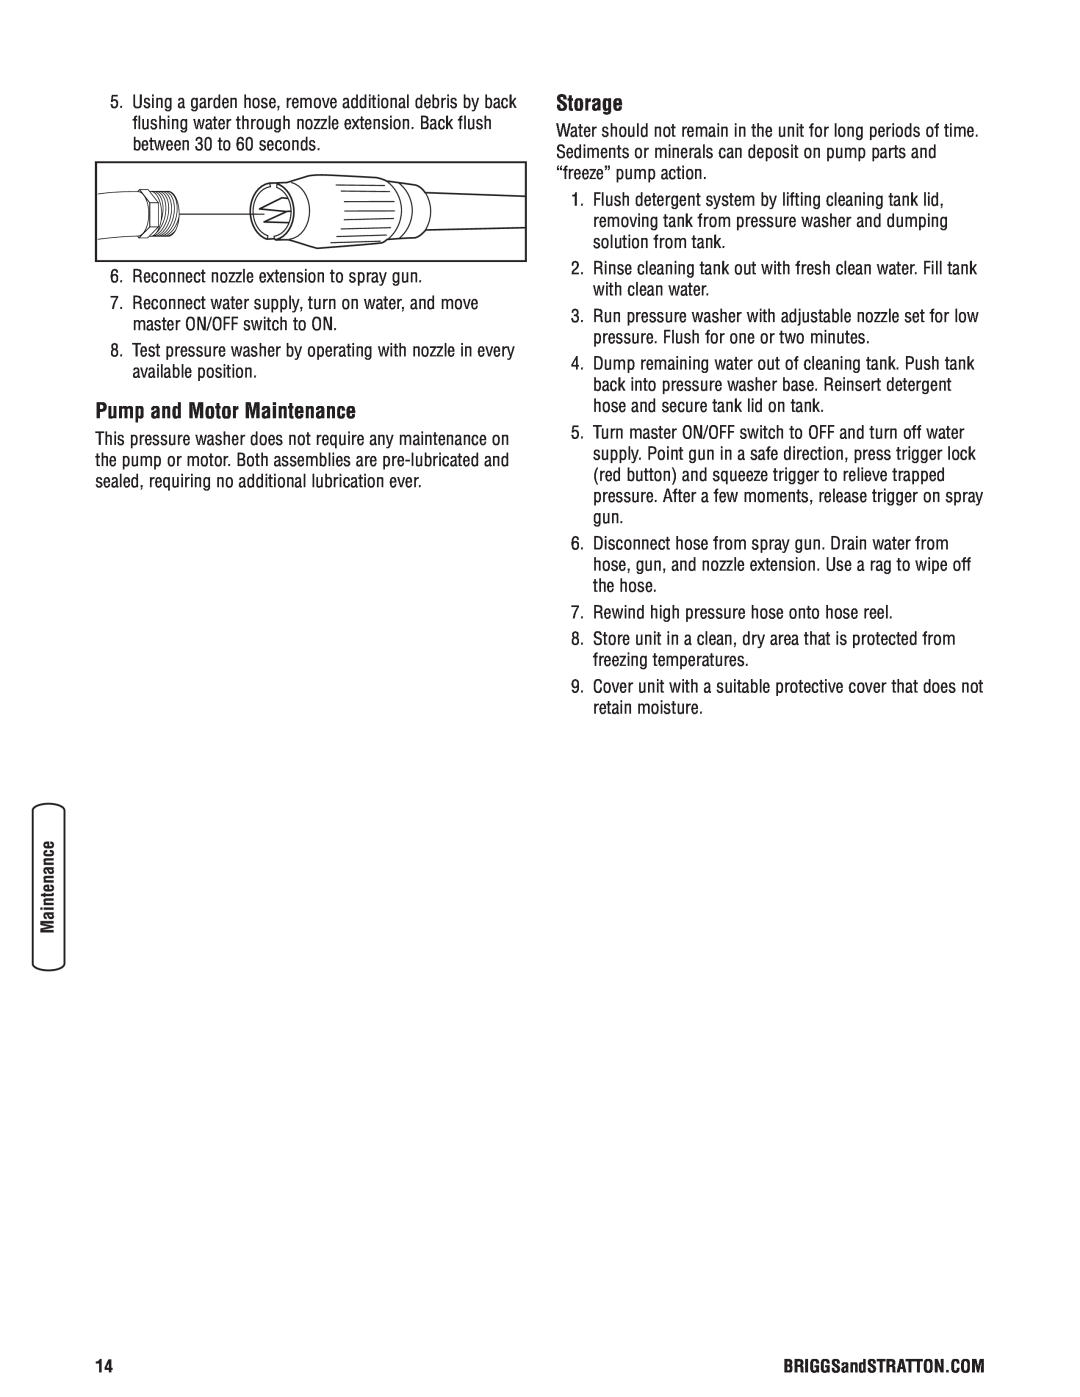 Briggs & Stratton Electric Pressure Washer manual Pump and Motor Maintenance, Storage 